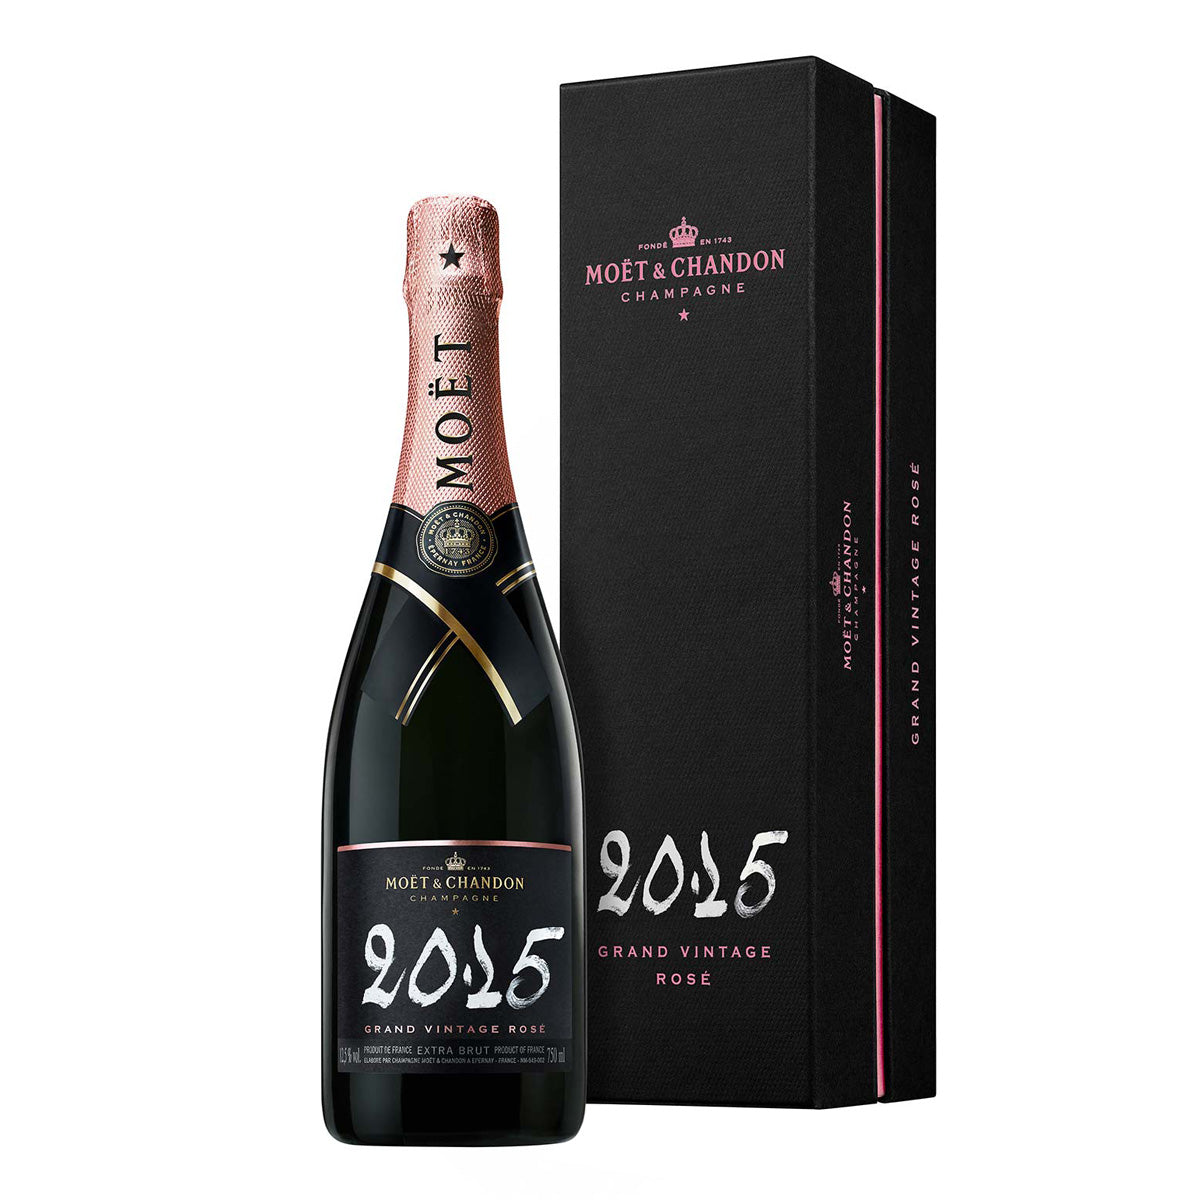 Moët & Chandon Grand Vintage Rosé 2015 with Gift Box